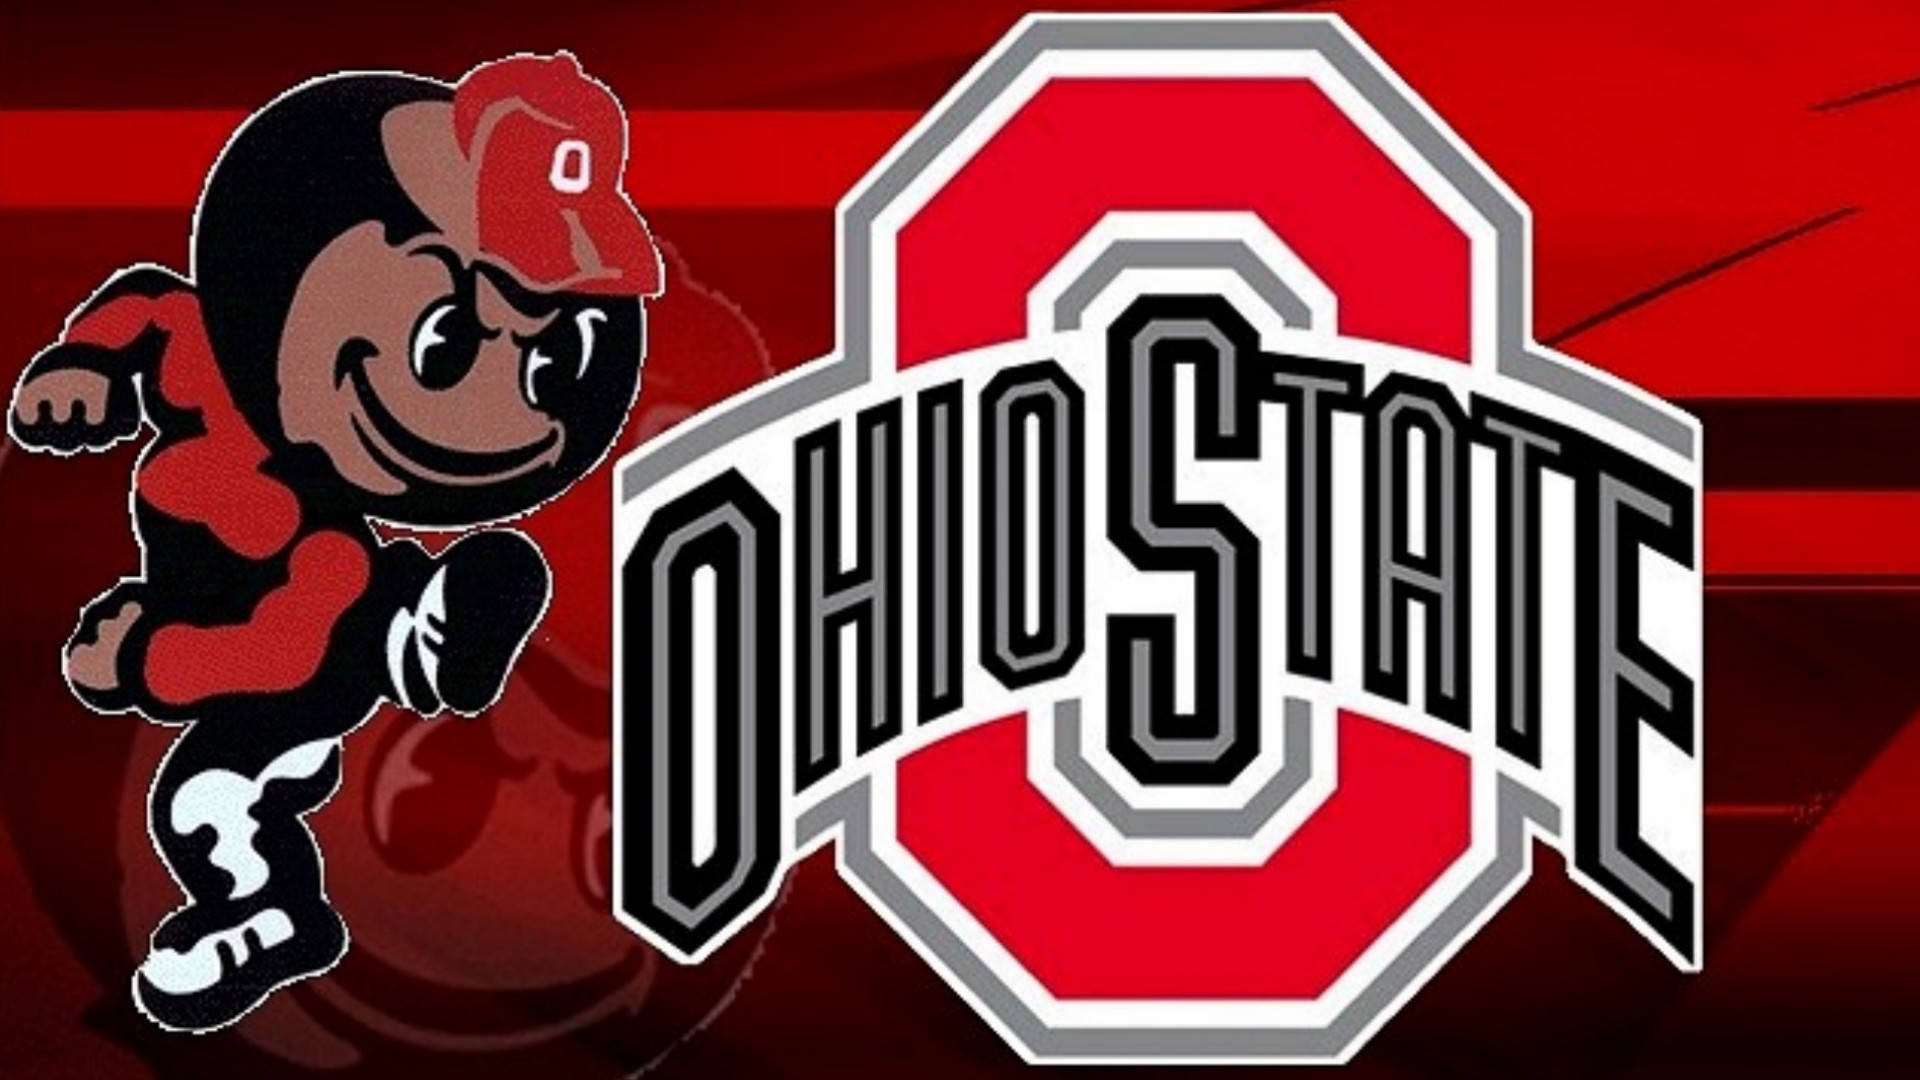 Ohio State University Mascot Digital Illustration Wallpaper